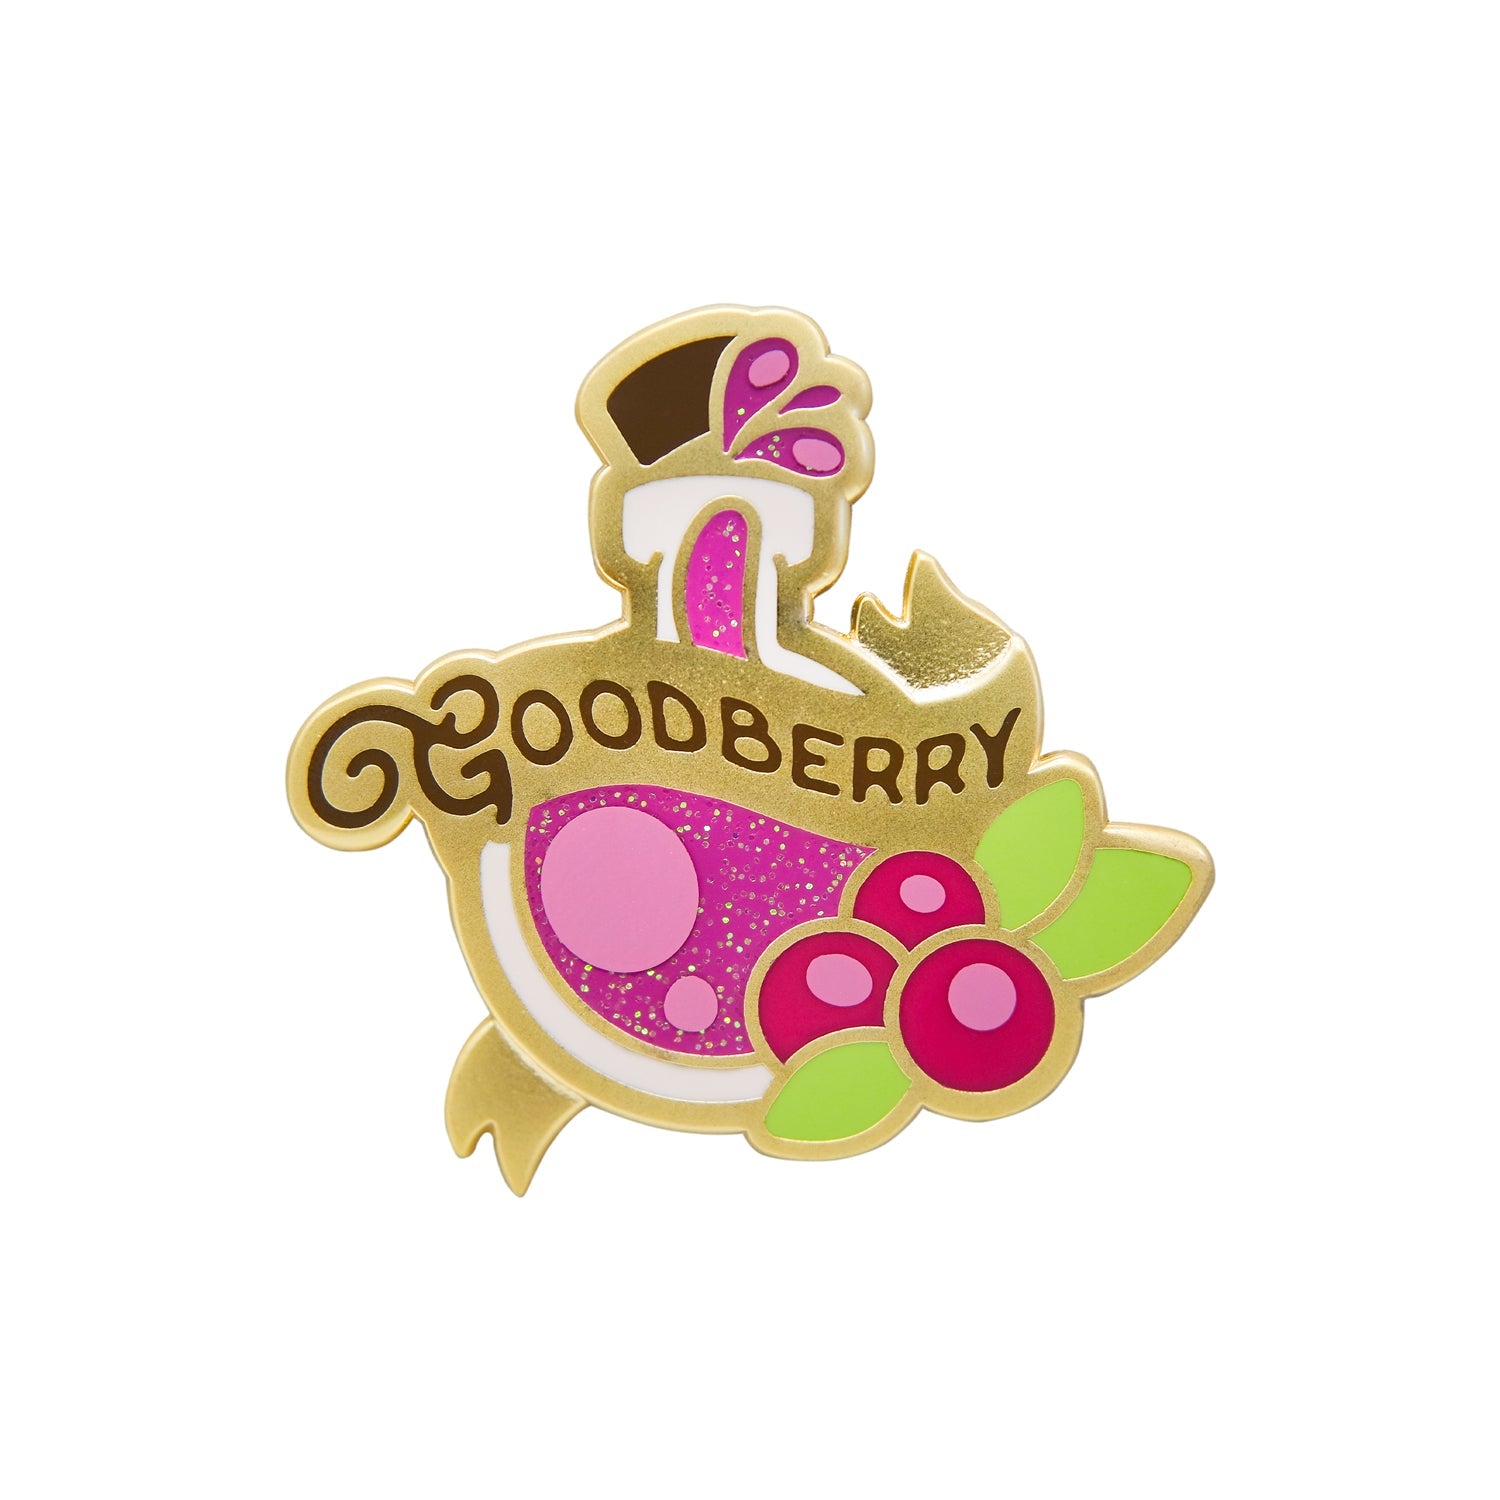 Sanshee - Goodberry Juice Glitter Pin